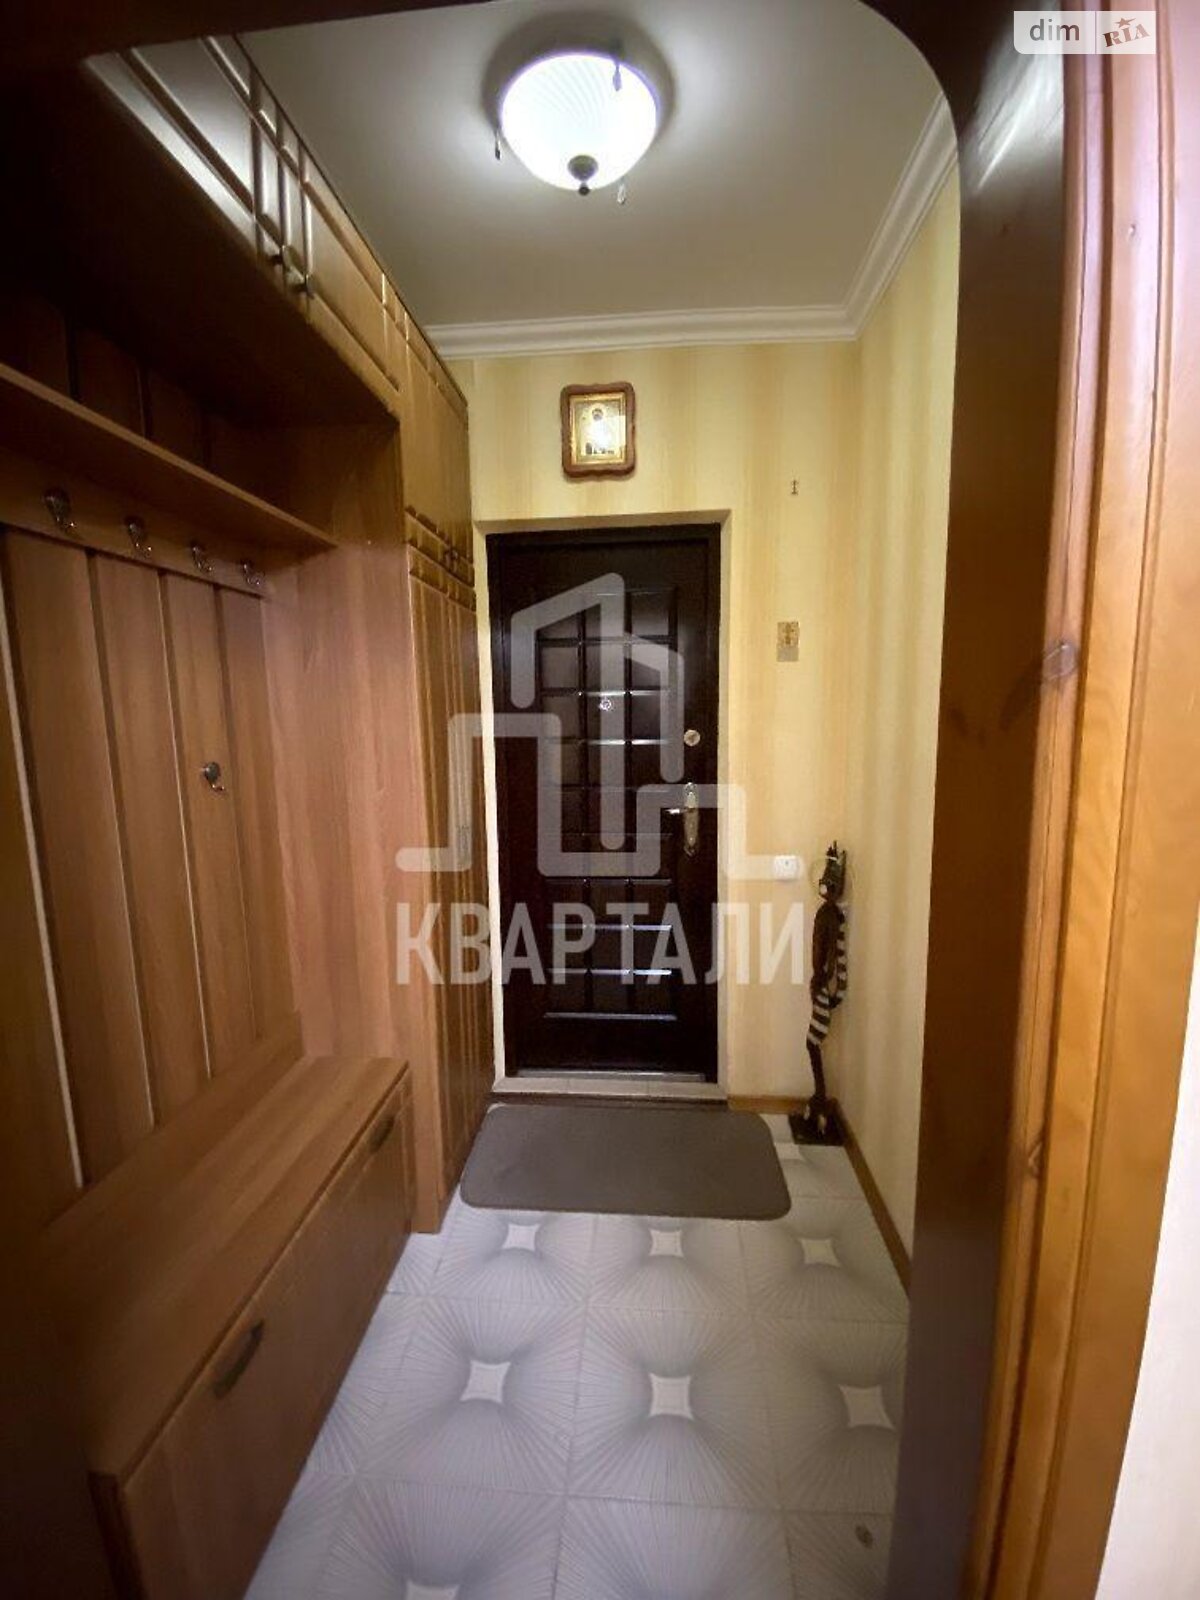 Продажа трехкомнатной квартиры в Киеве, на ул. Драгоманова 1Г, район Дарницкий фото 1